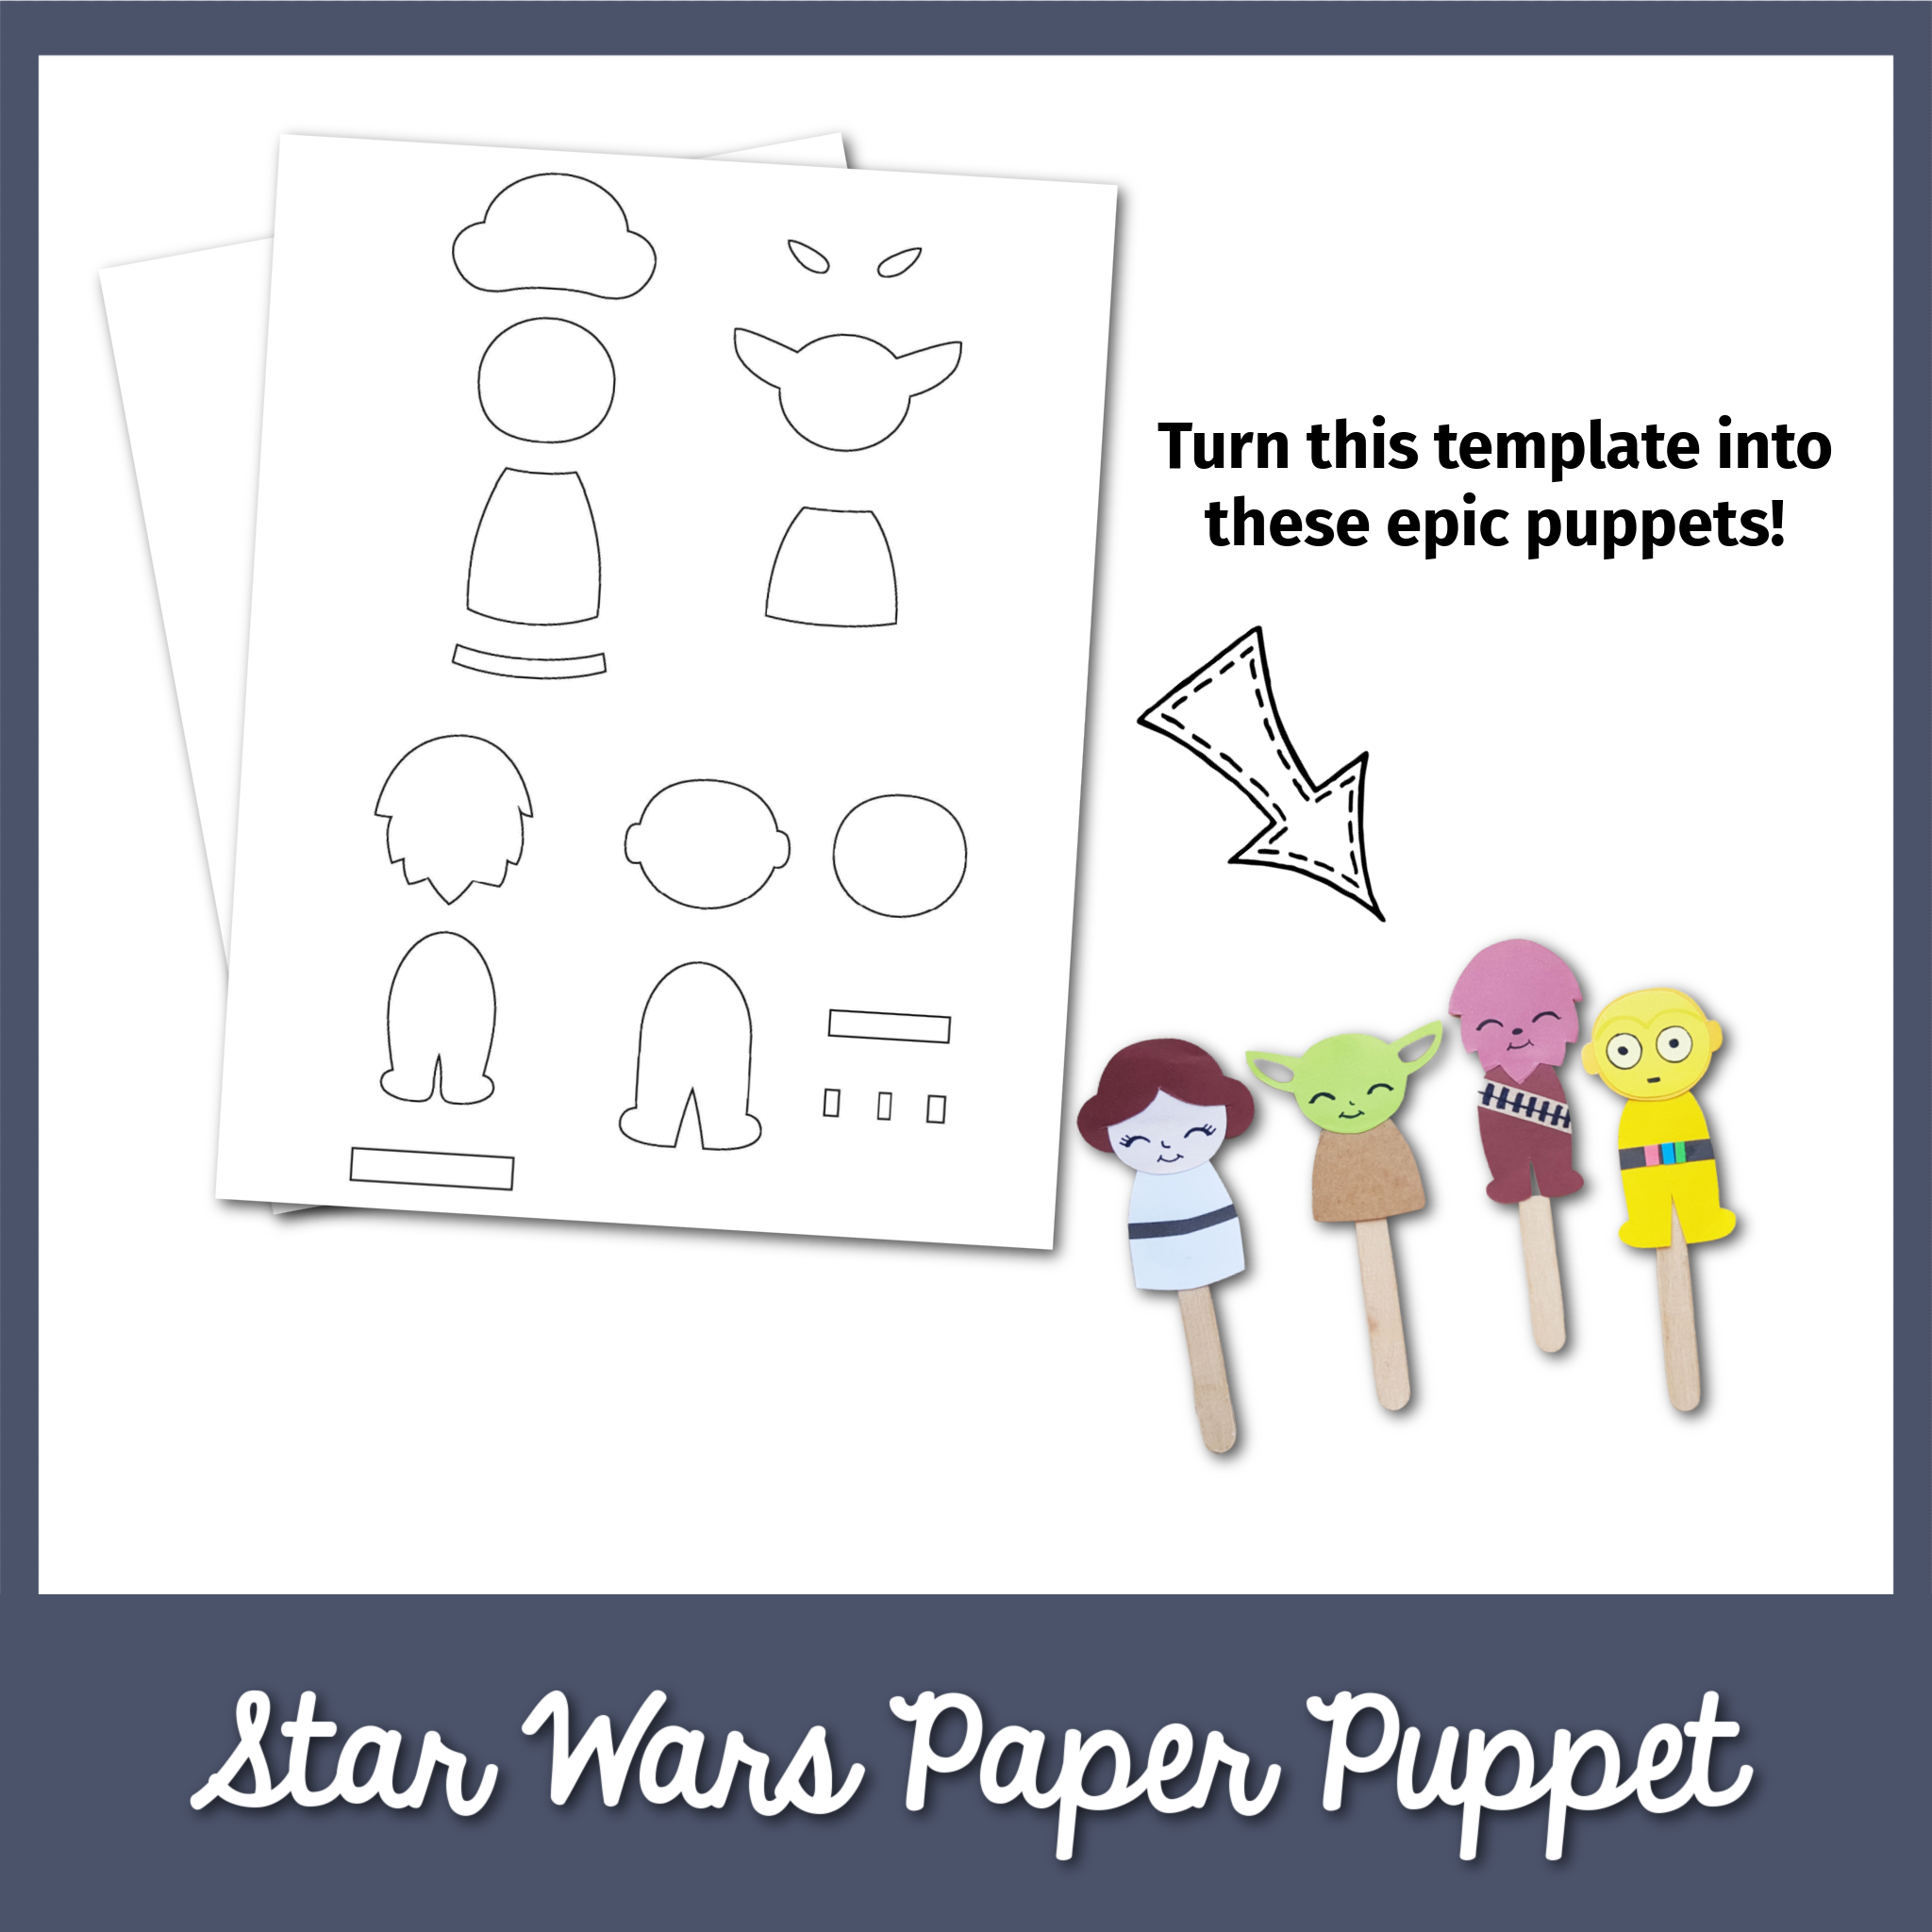 Star Wars Puppets Papercraft